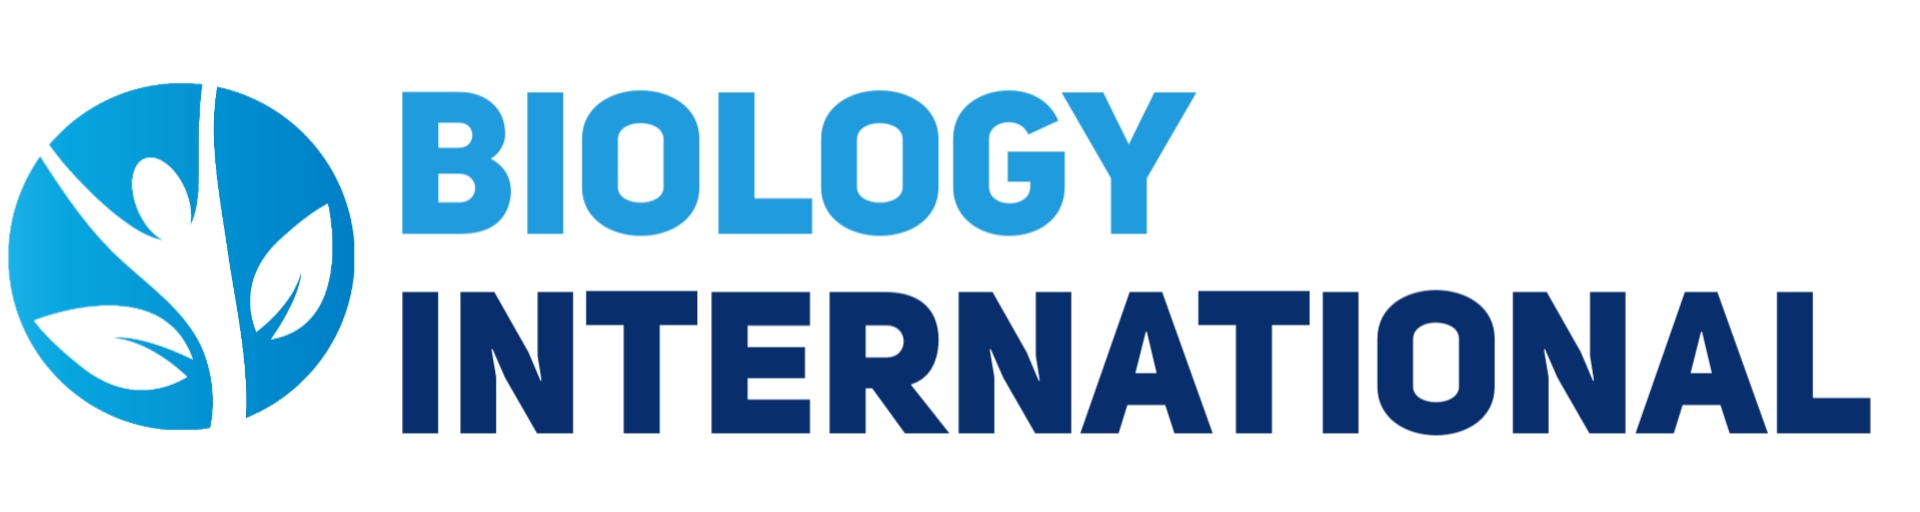 Biology International